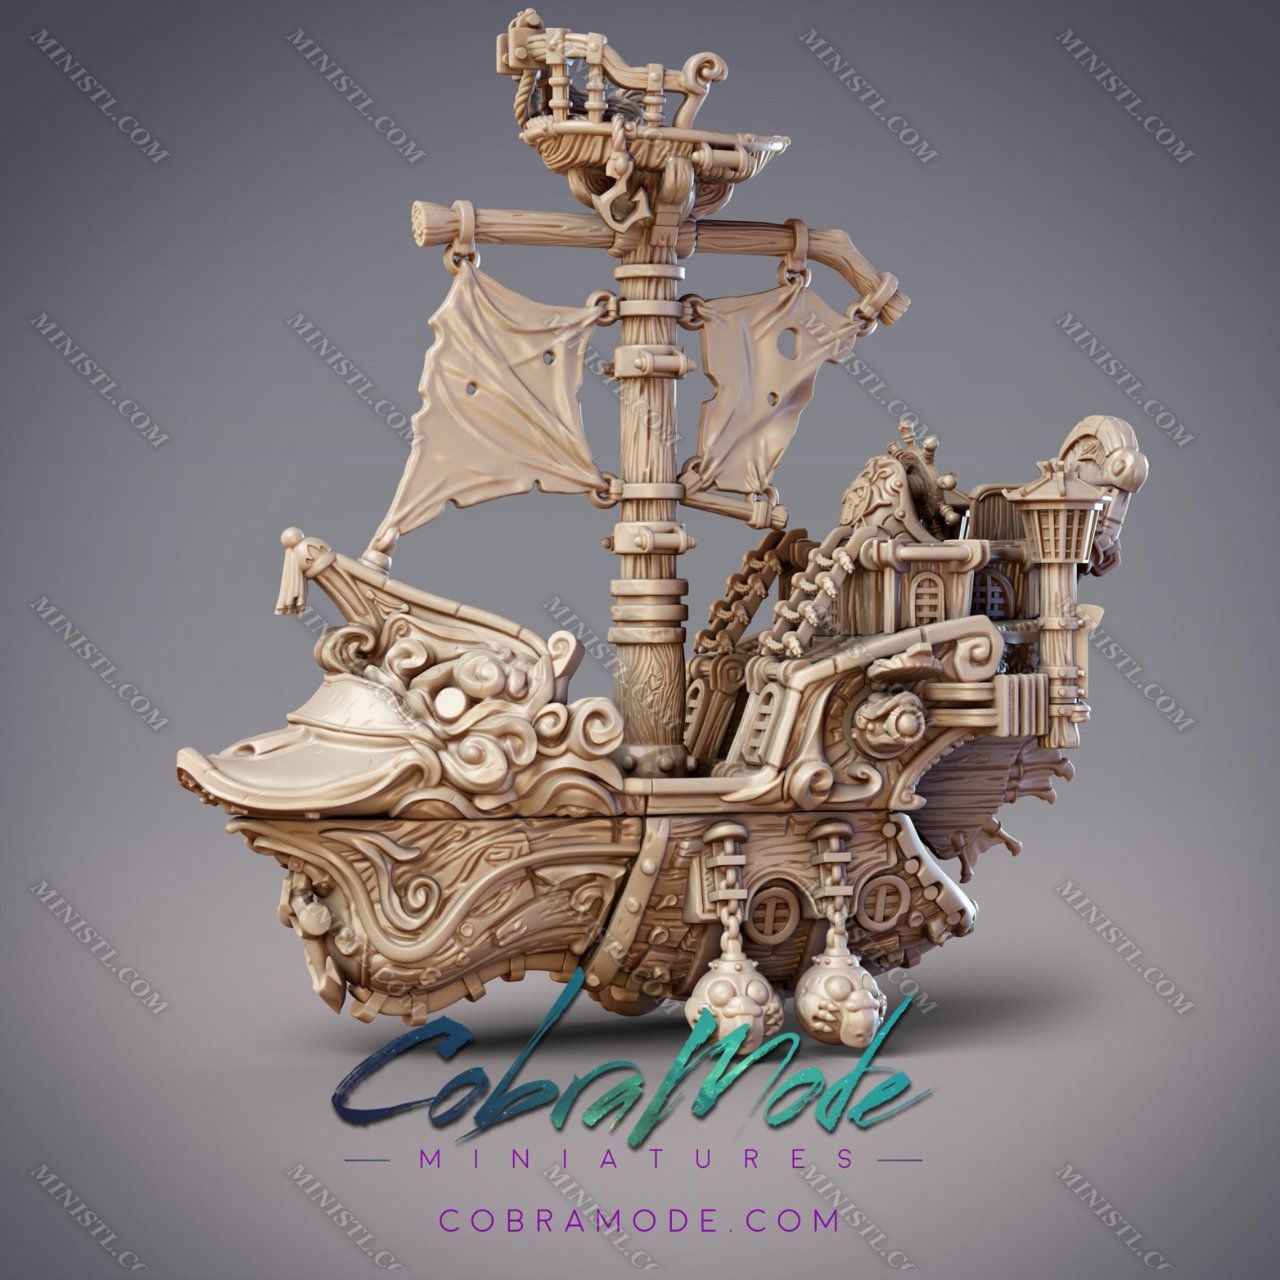 All Miniature Pirate Ship Budgerigar CobraMode Loyalty  MINISTL